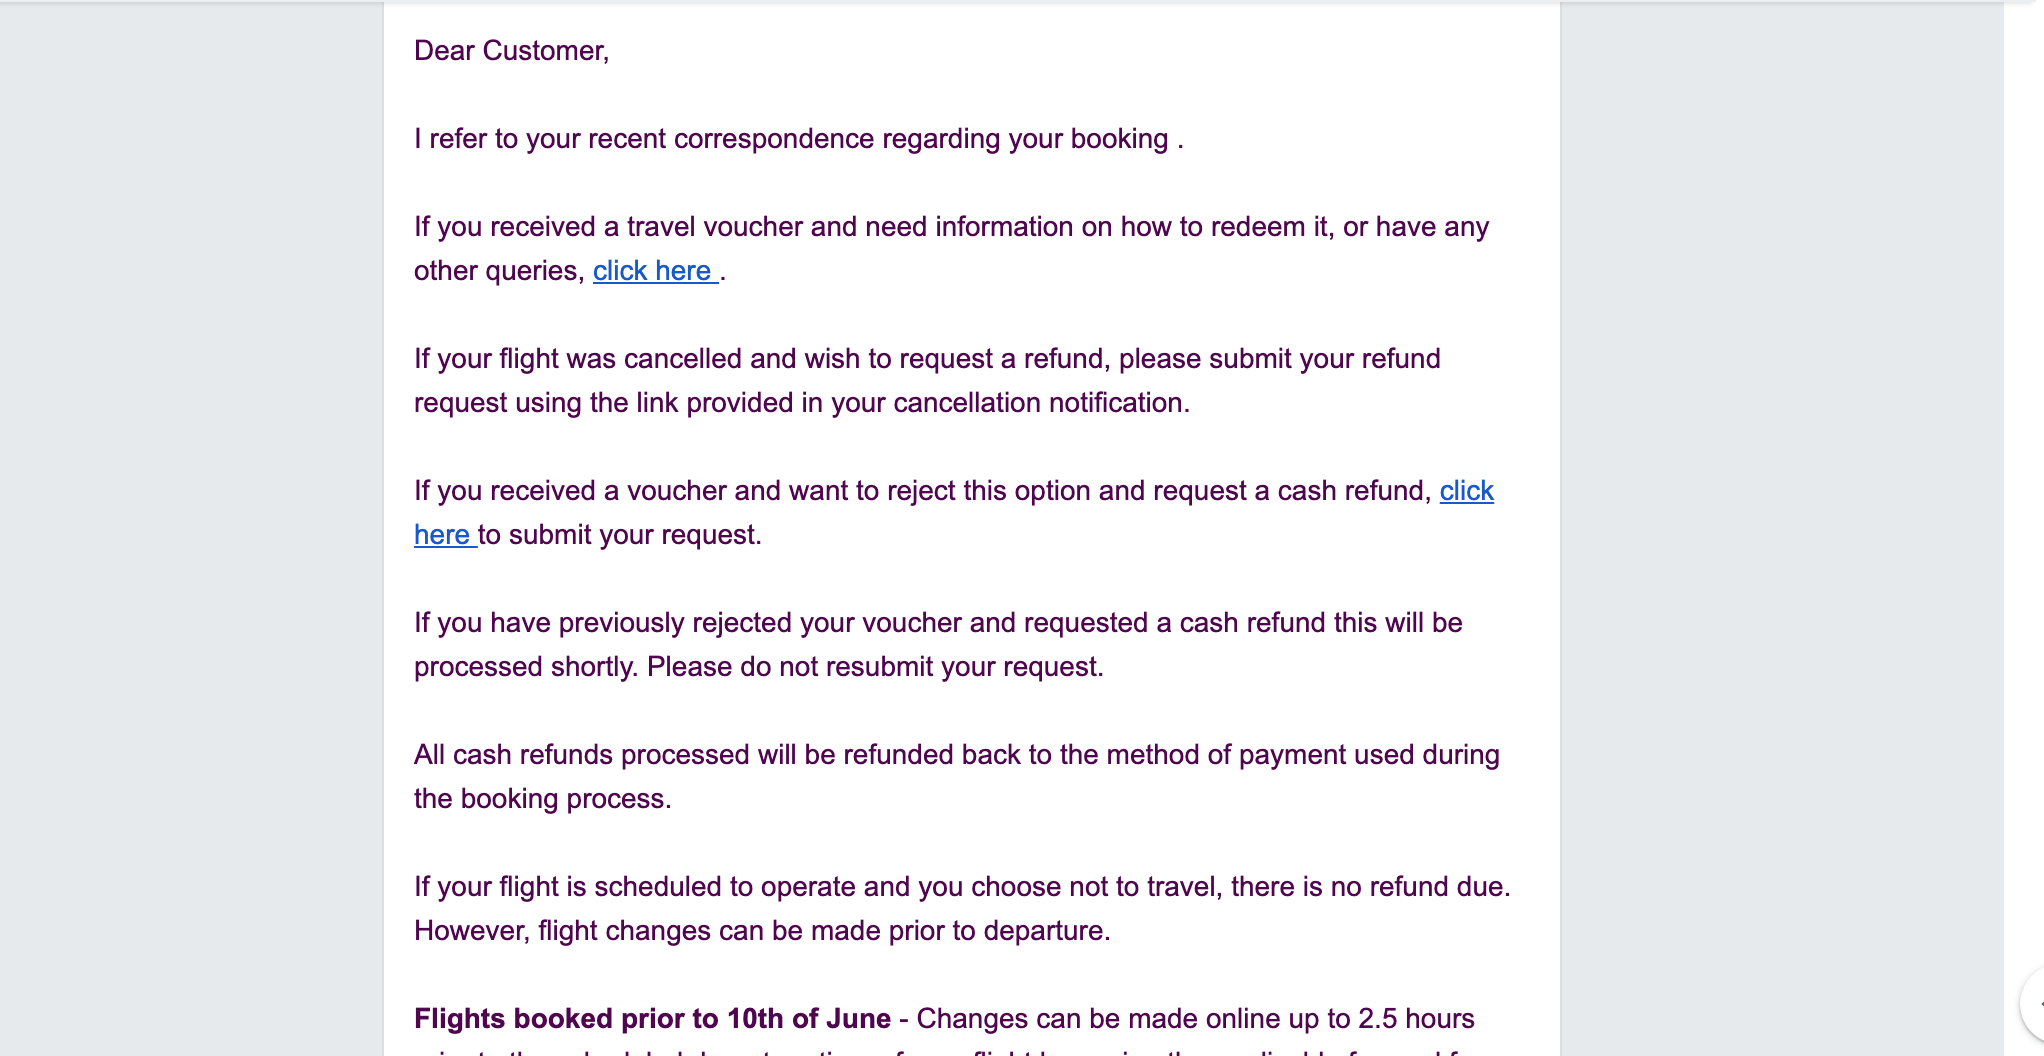 copy-paste response I got from Ryanair regarding my compliant